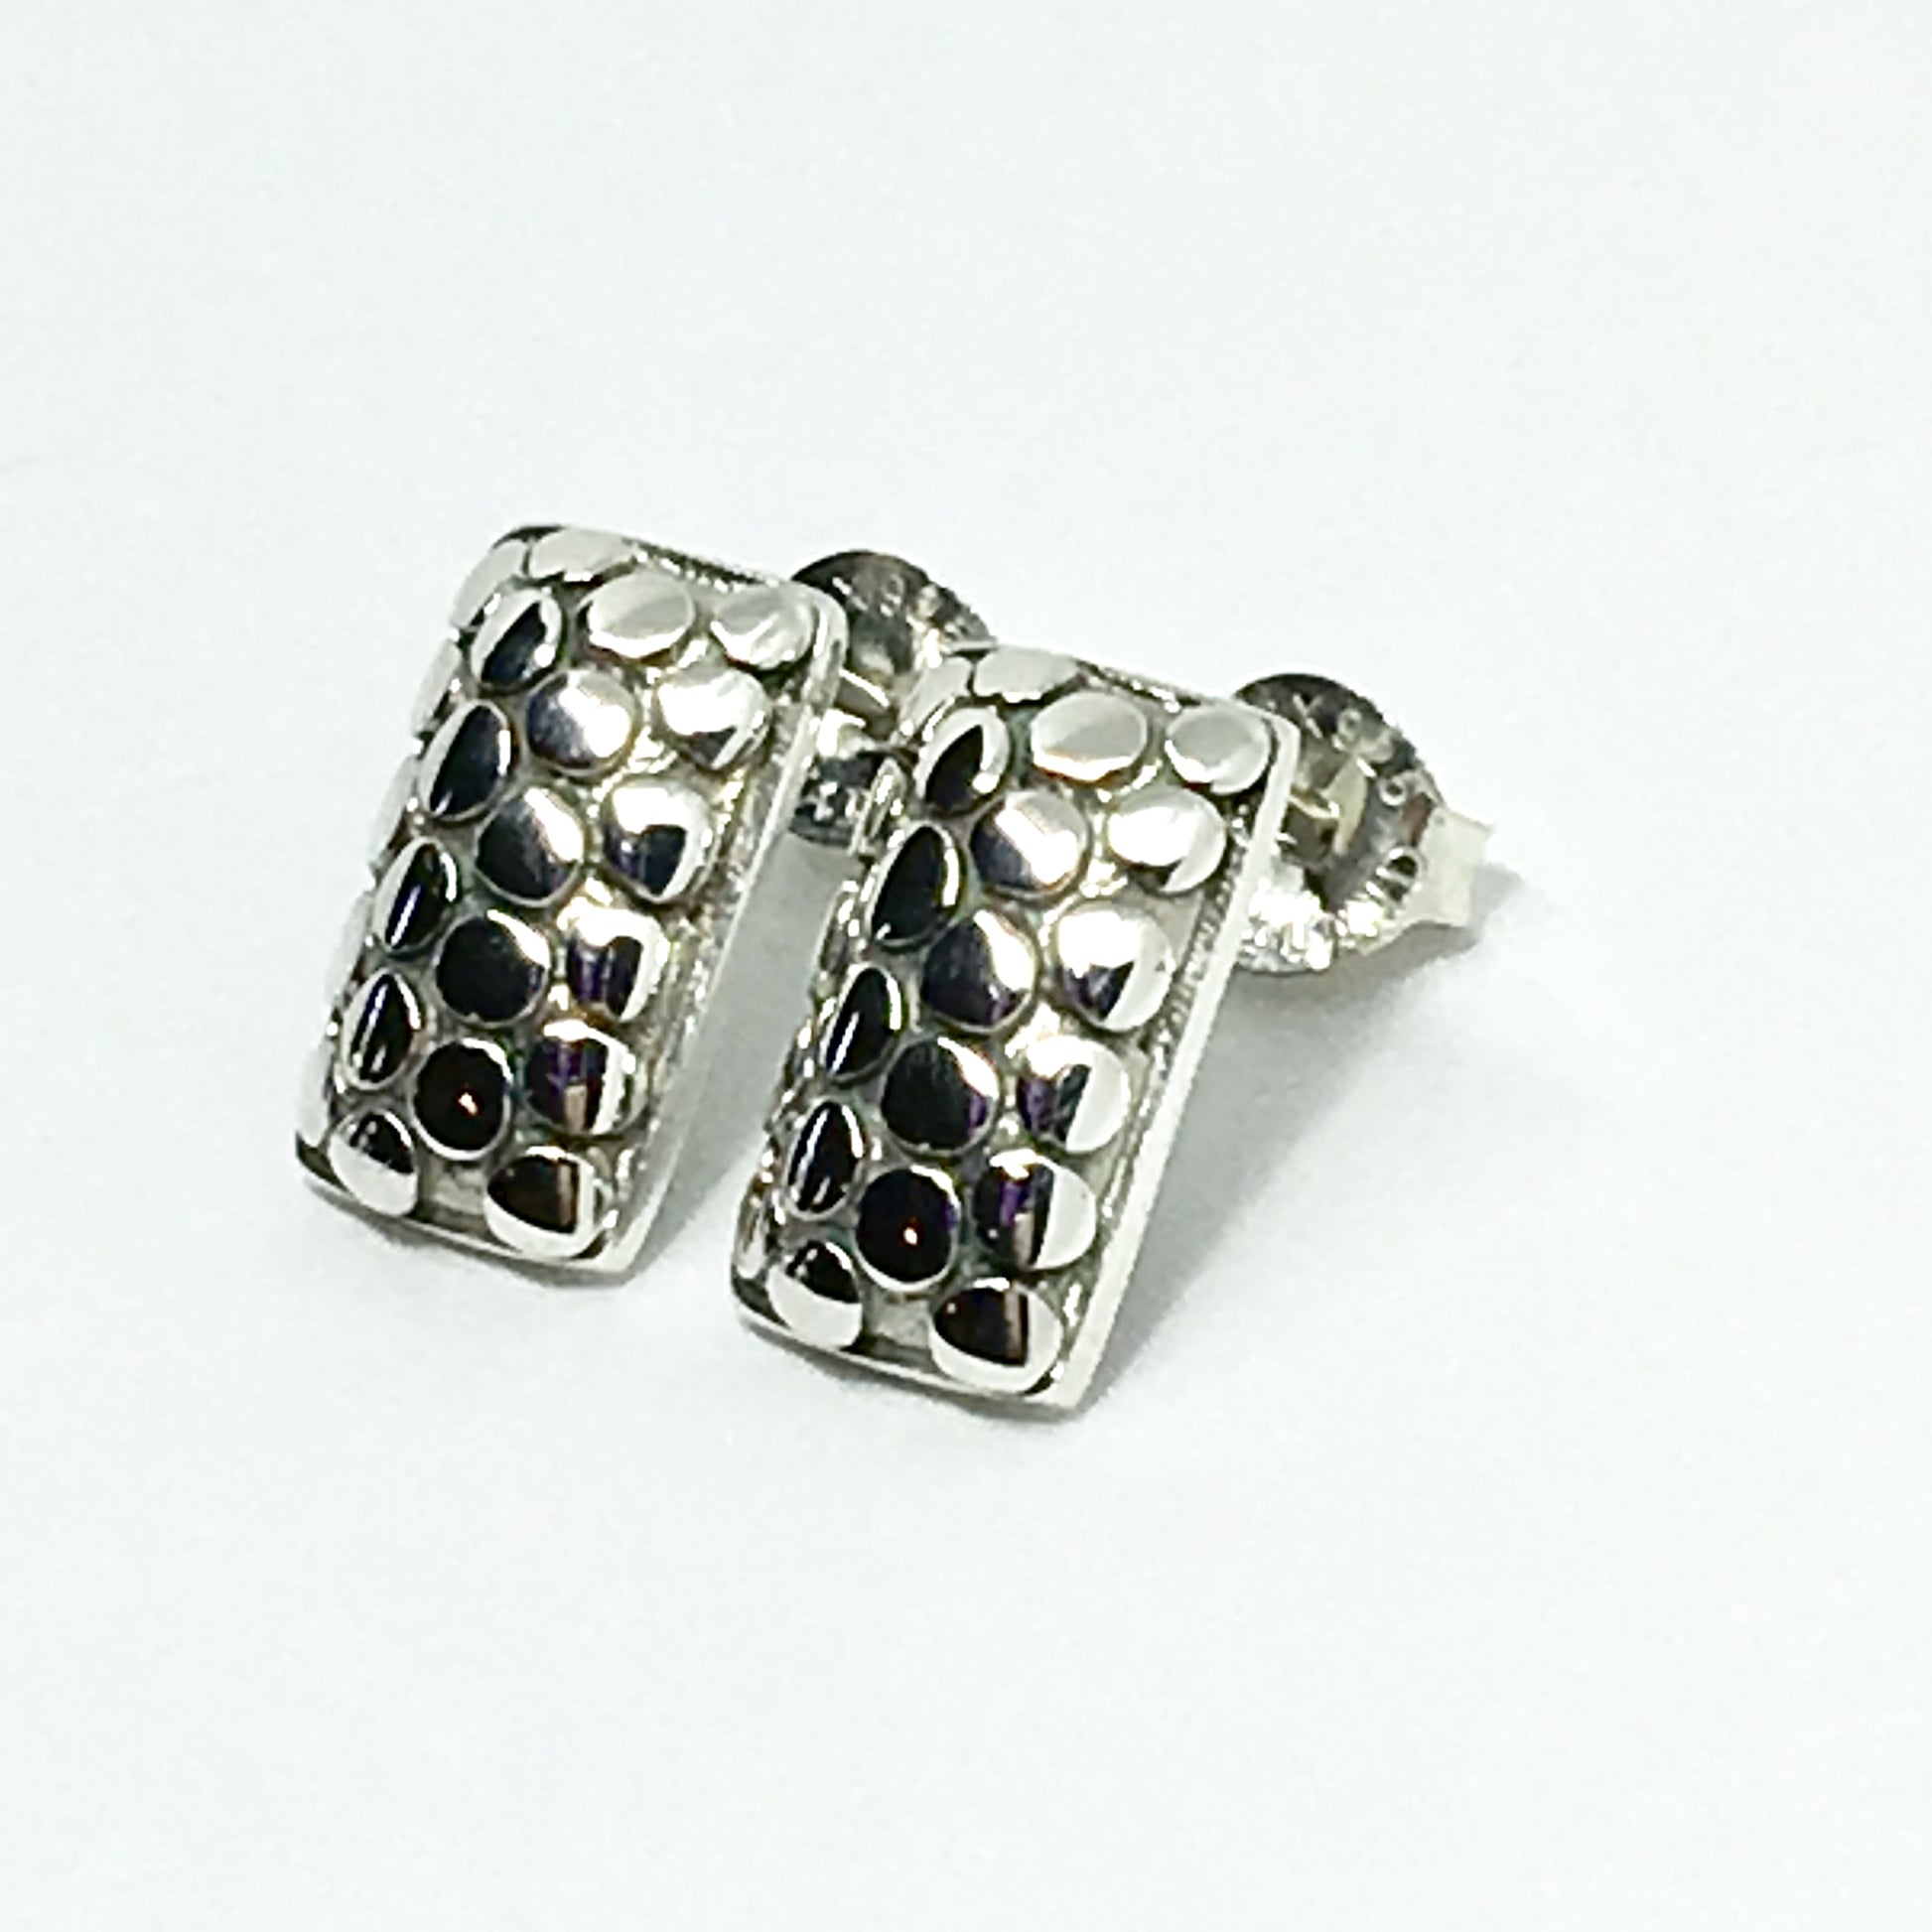 Earrings - Sterling Silver Pebble Grain Bar Earrings - Designer Modernist Style Short Drop Earrings